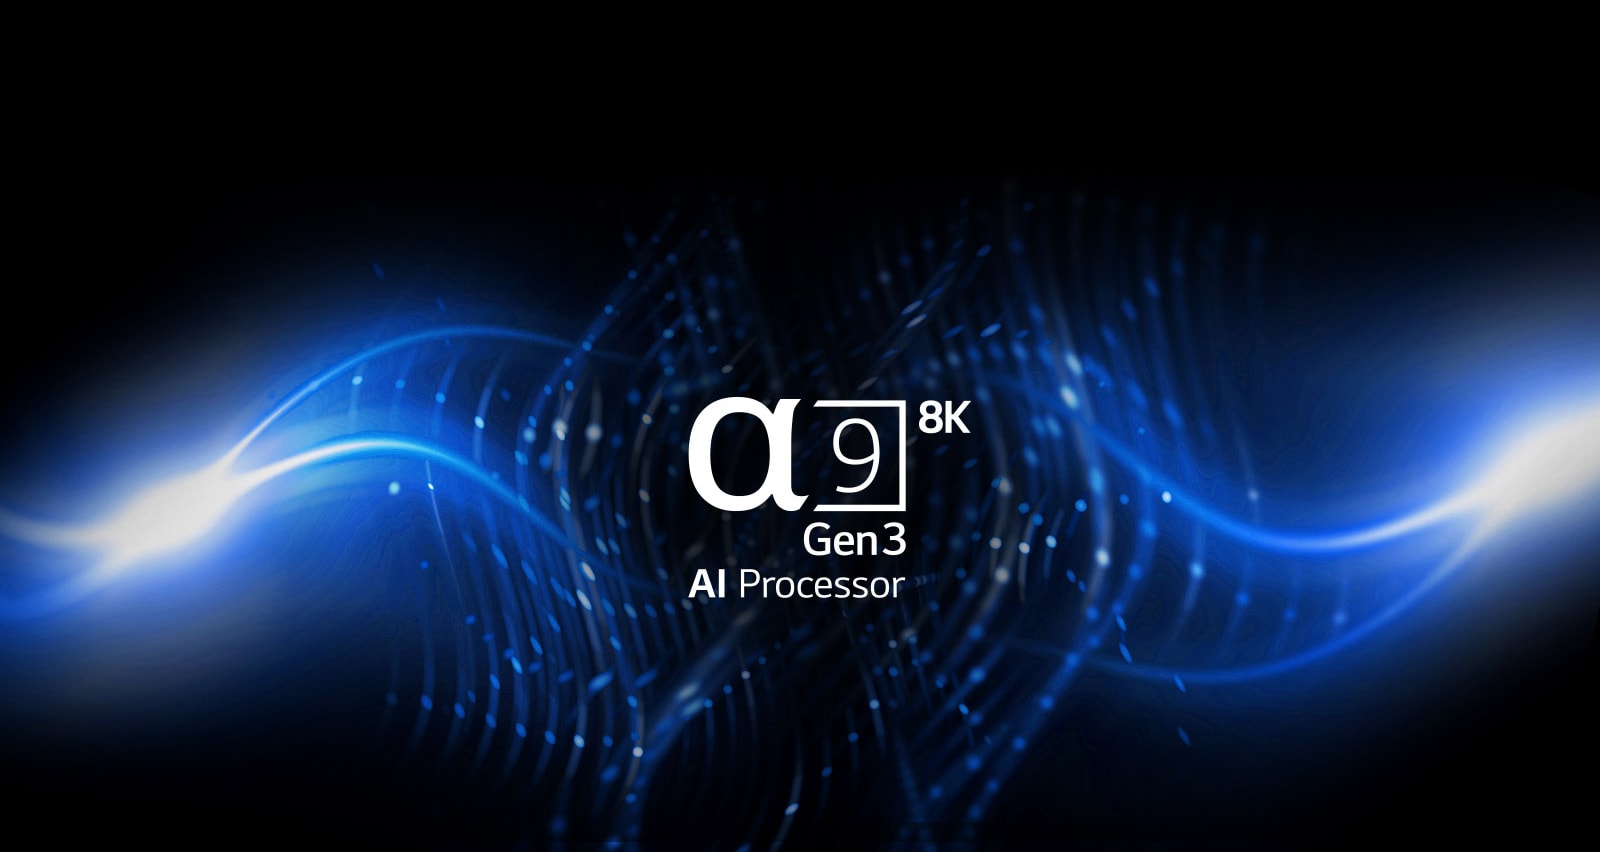 Alpha 9 Gen3 logo on black and blue graphic background